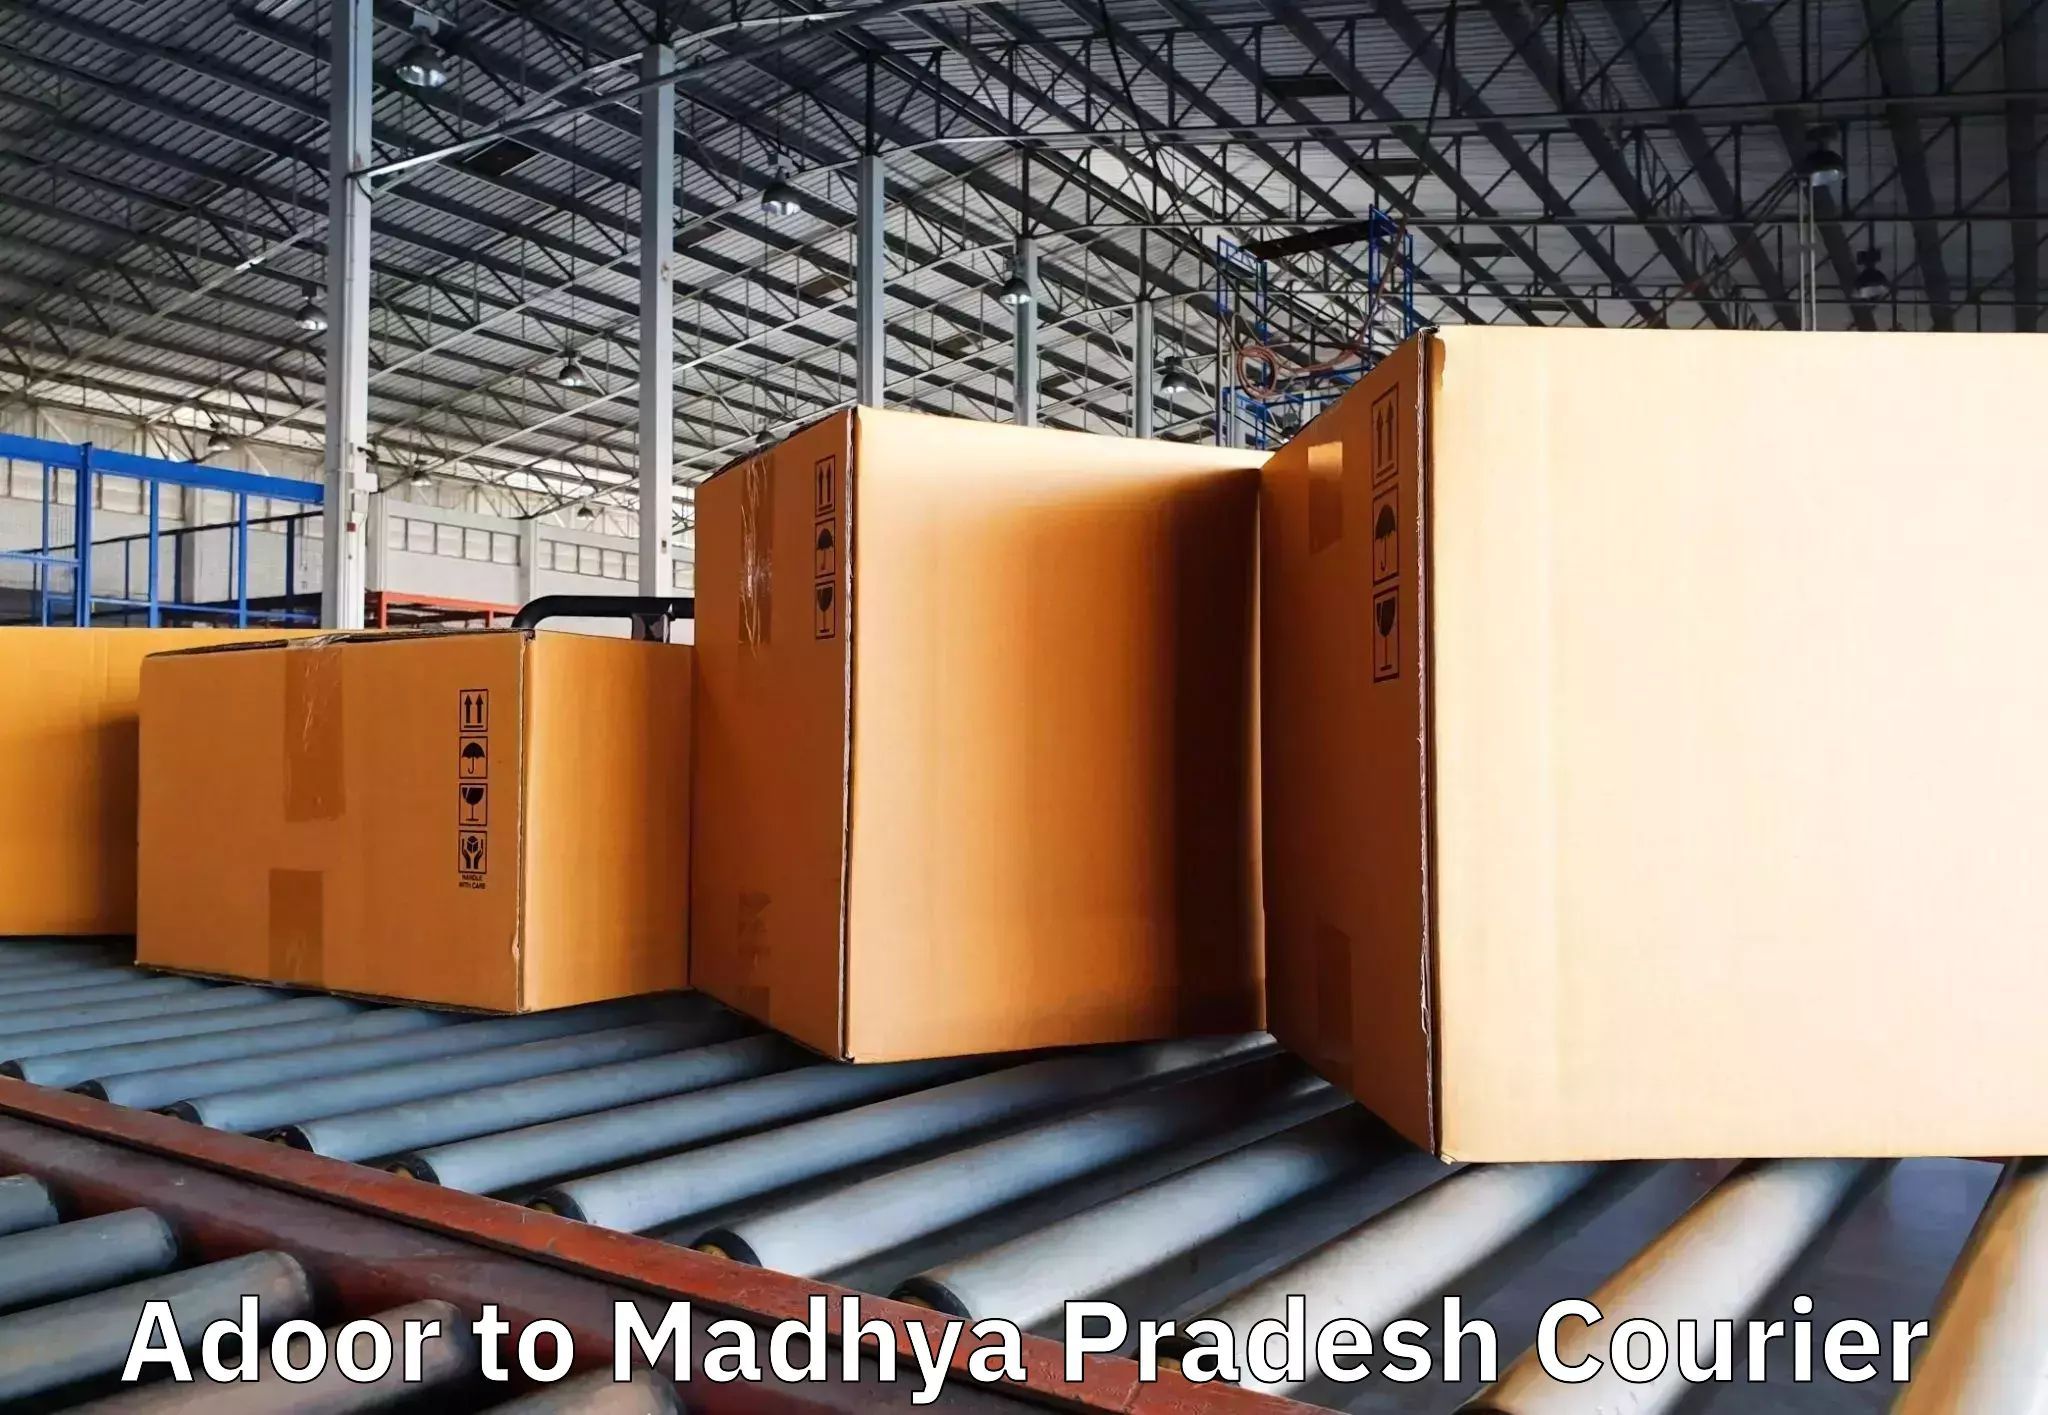 Furniture transport company Adoor to Madhya Pradesh